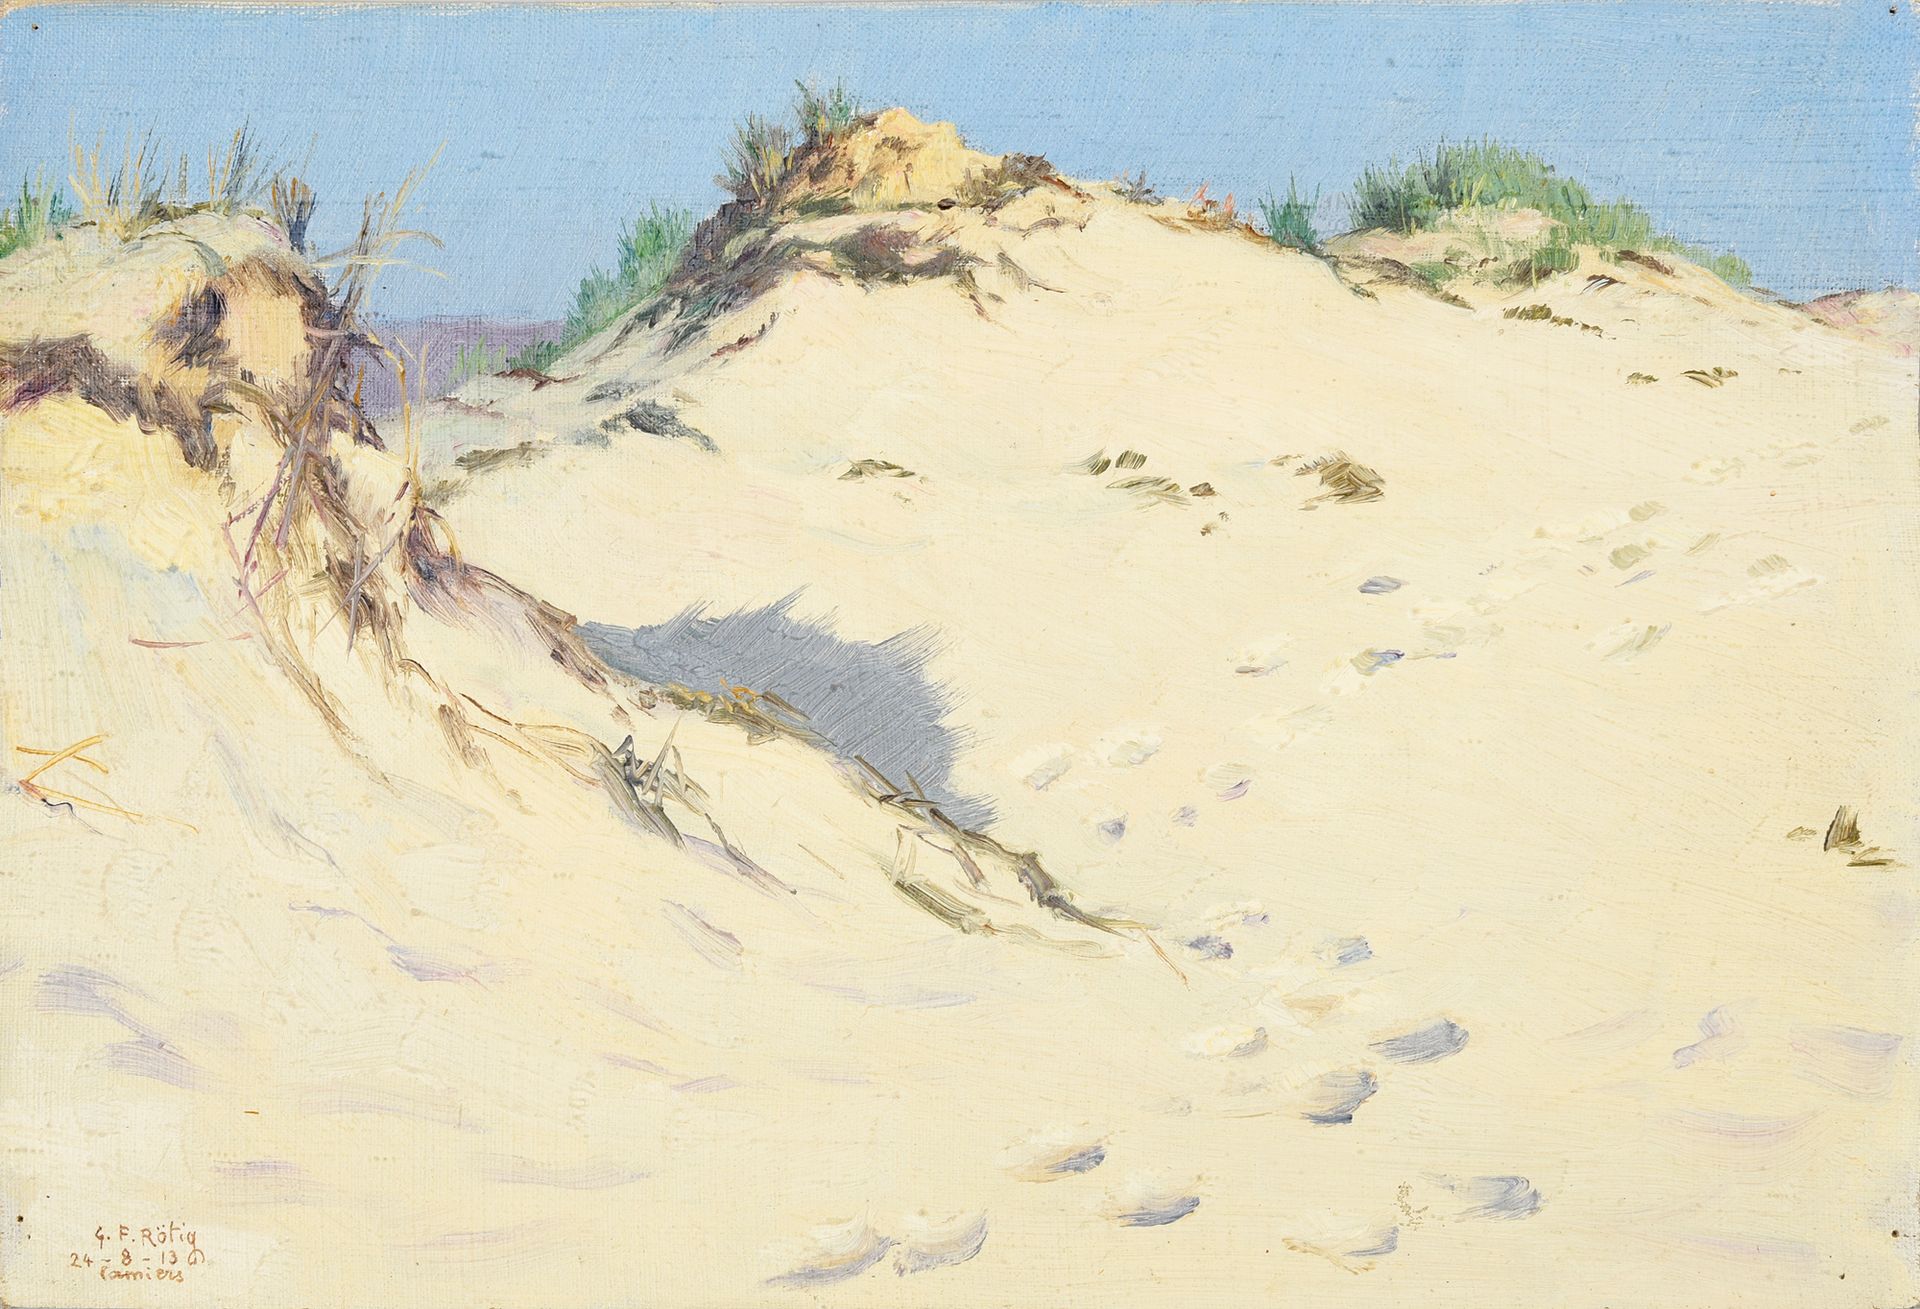 Georges Frédéric ROTIG (1873 - 1961) 沙丘。
布面油画，已签名，日期为24-8-13，左下方有 "Ramiers "注释。
&hellip;